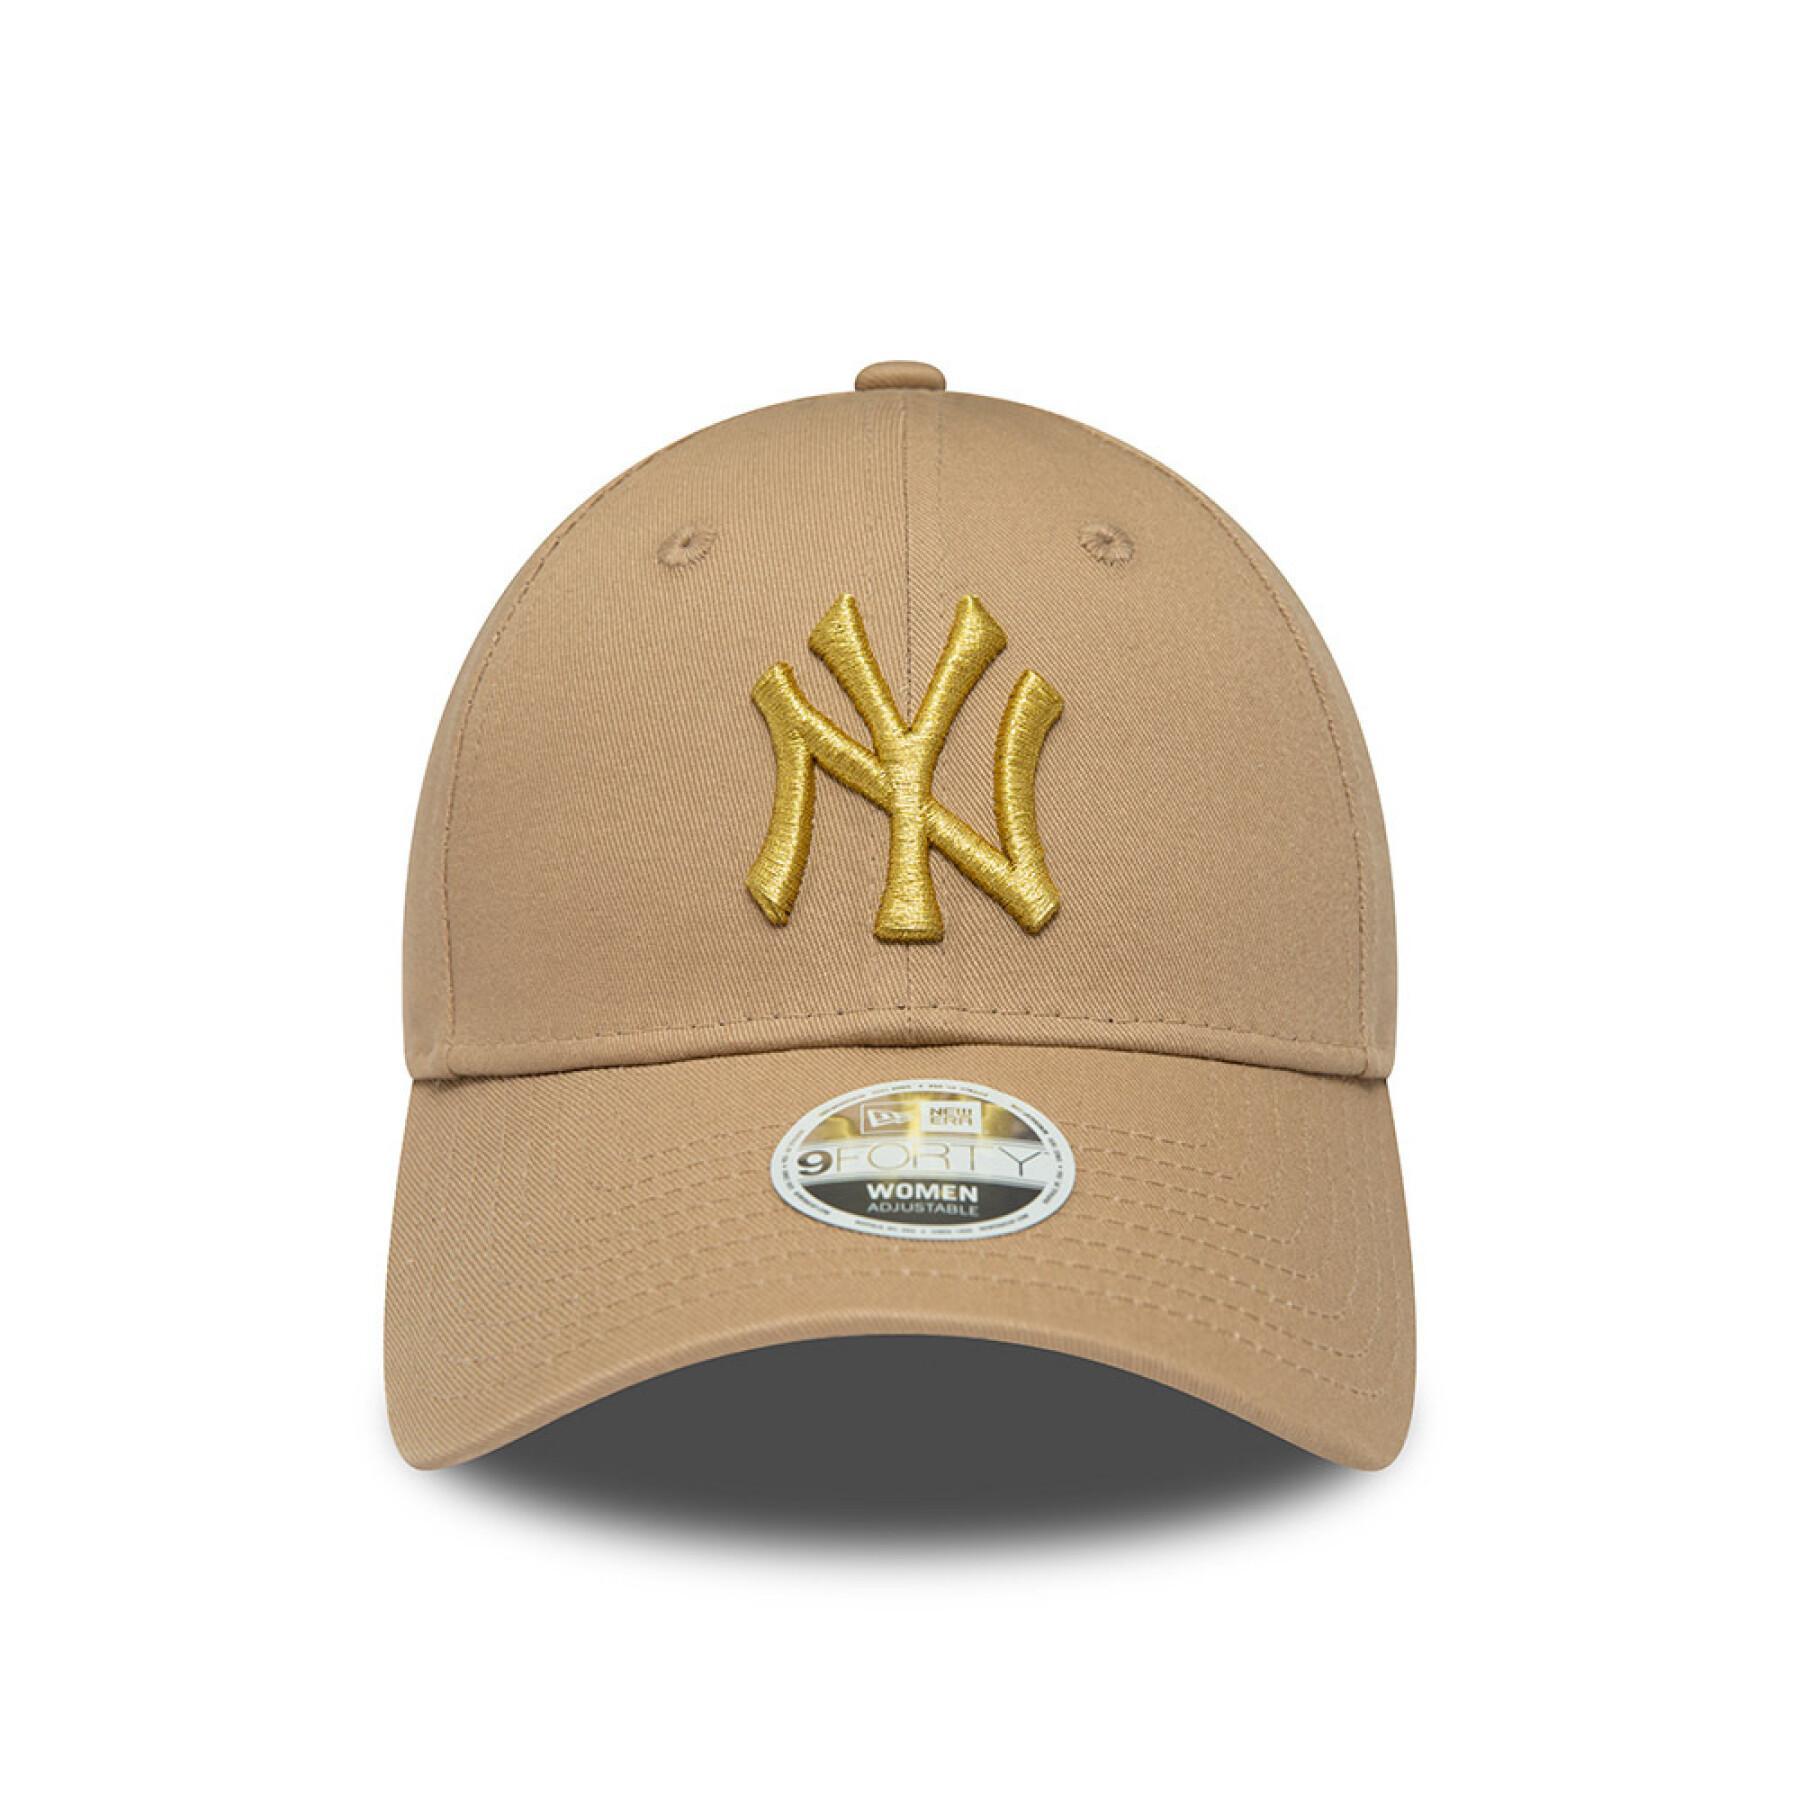 Czapka damska New York Yankees Metallic Logo